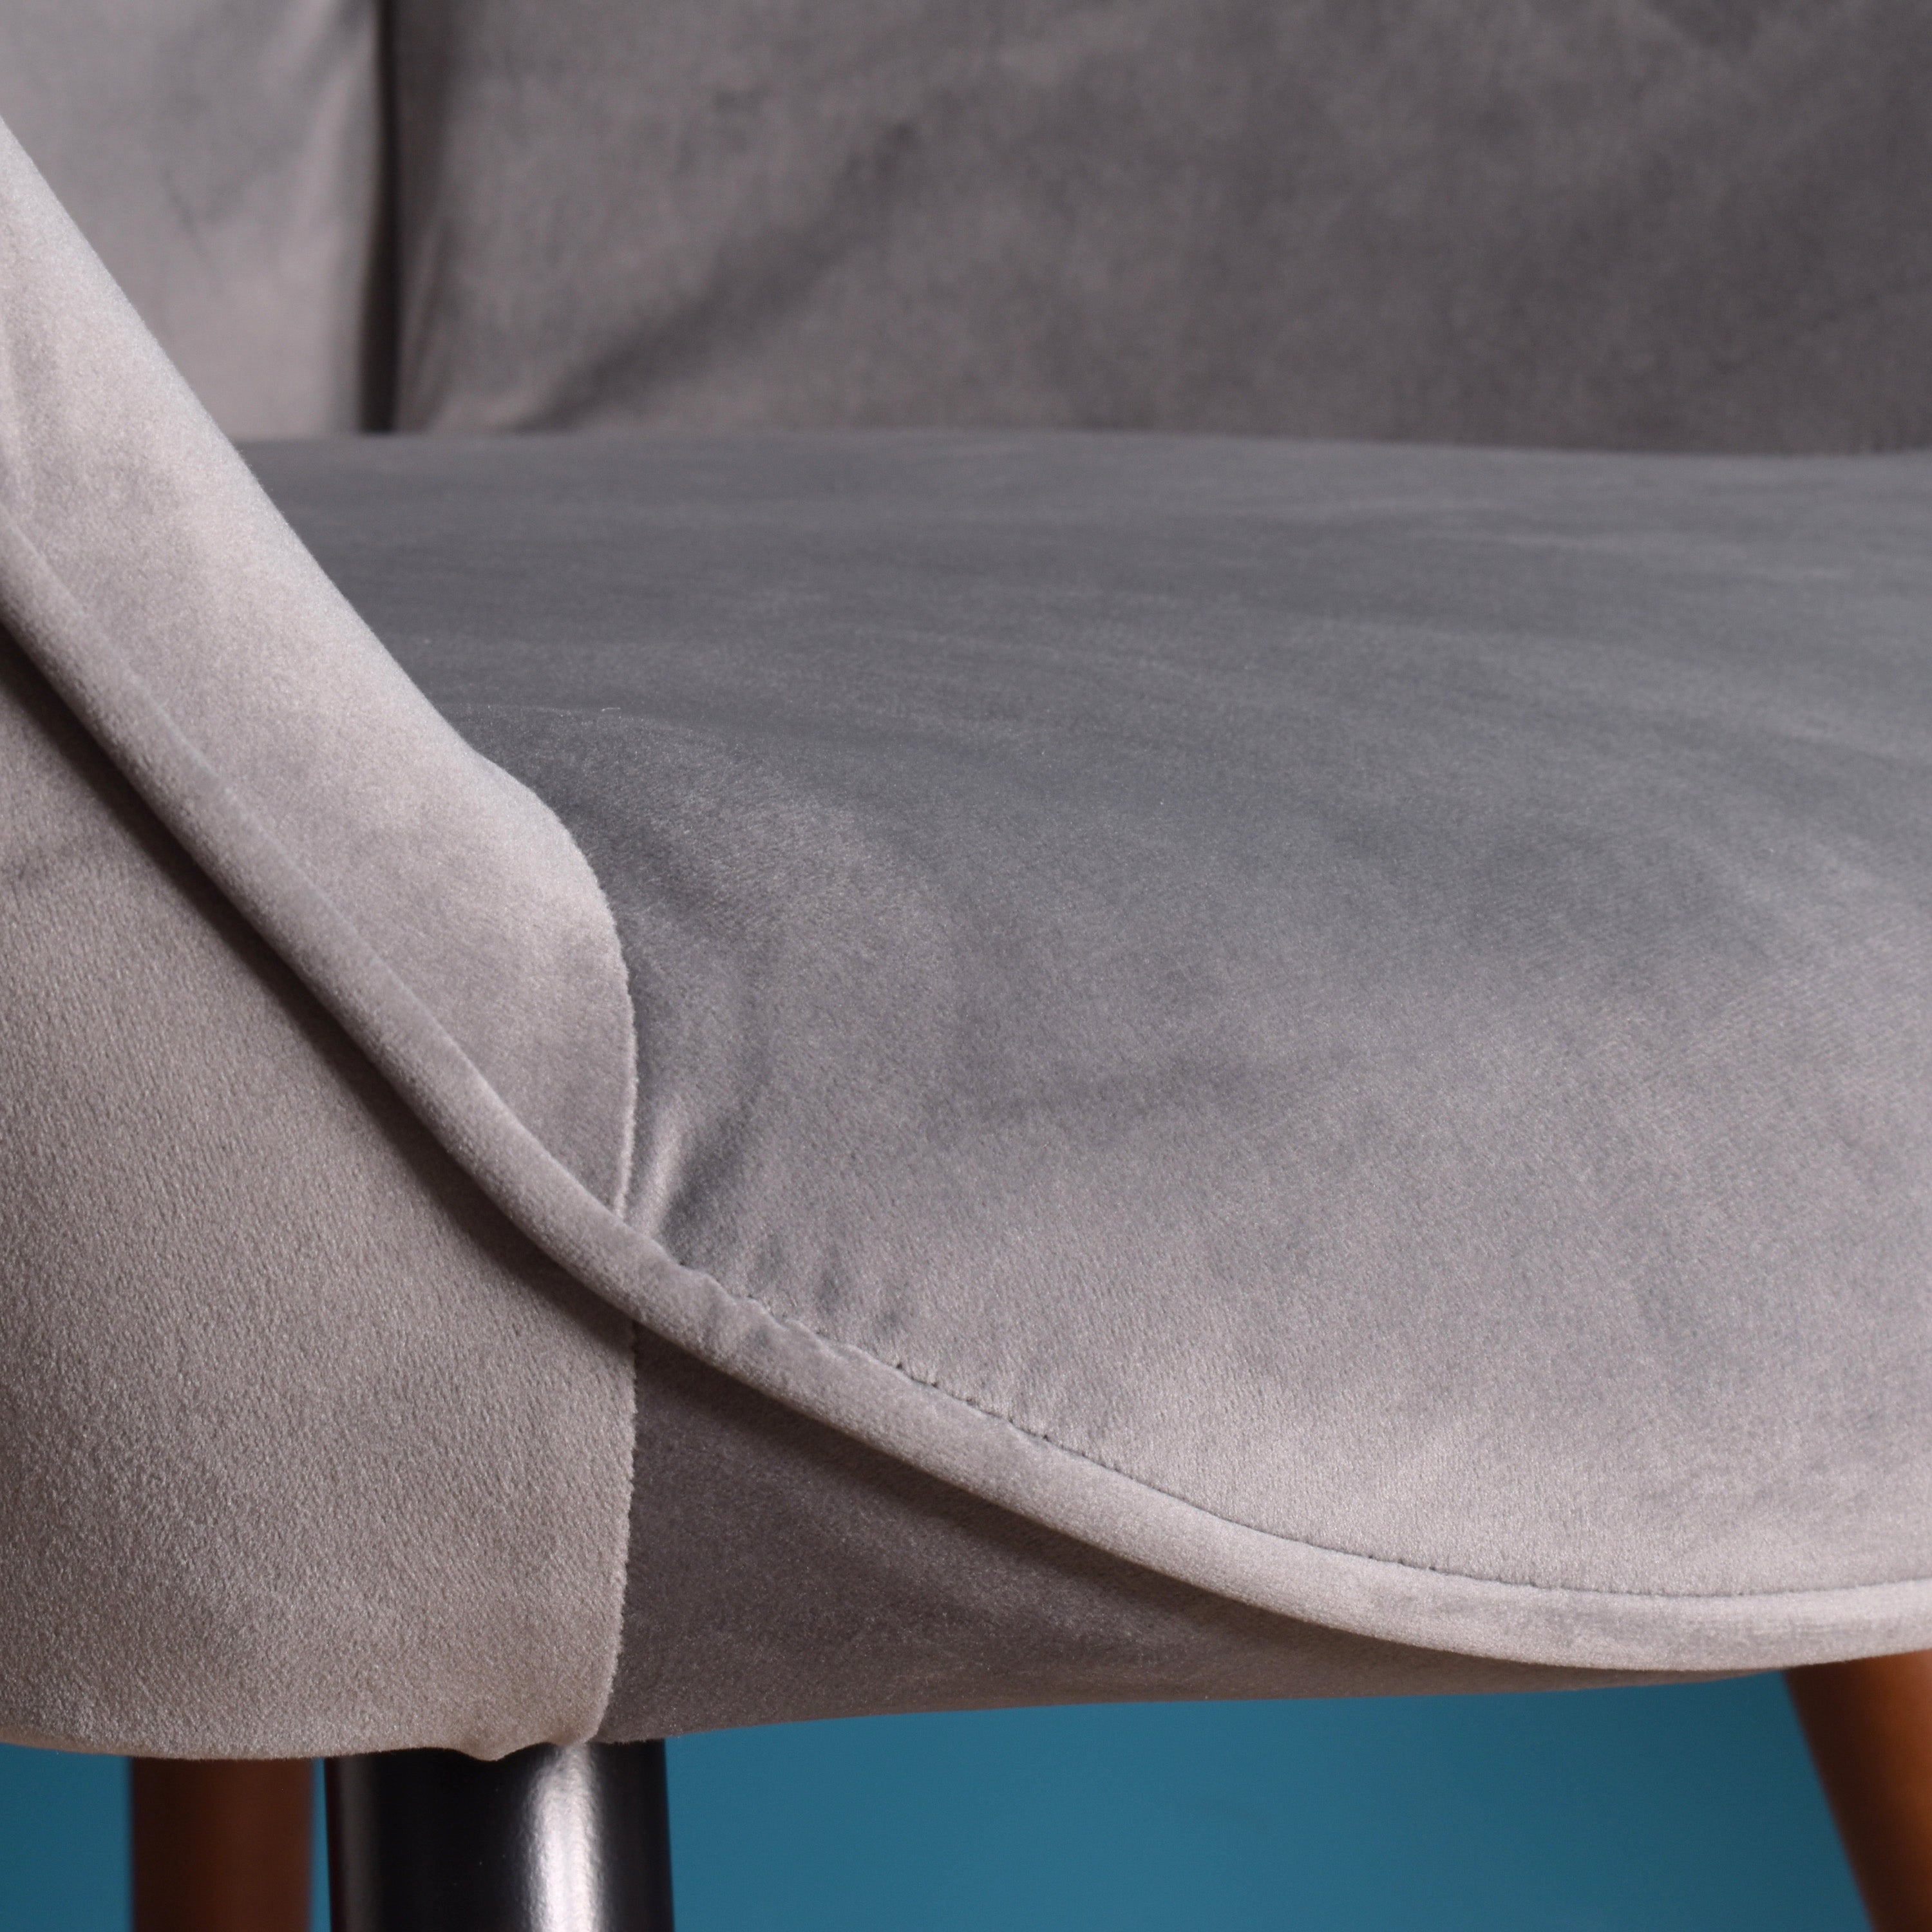 Scandinavian padded armchair comfortable backrest with armrests - KAS